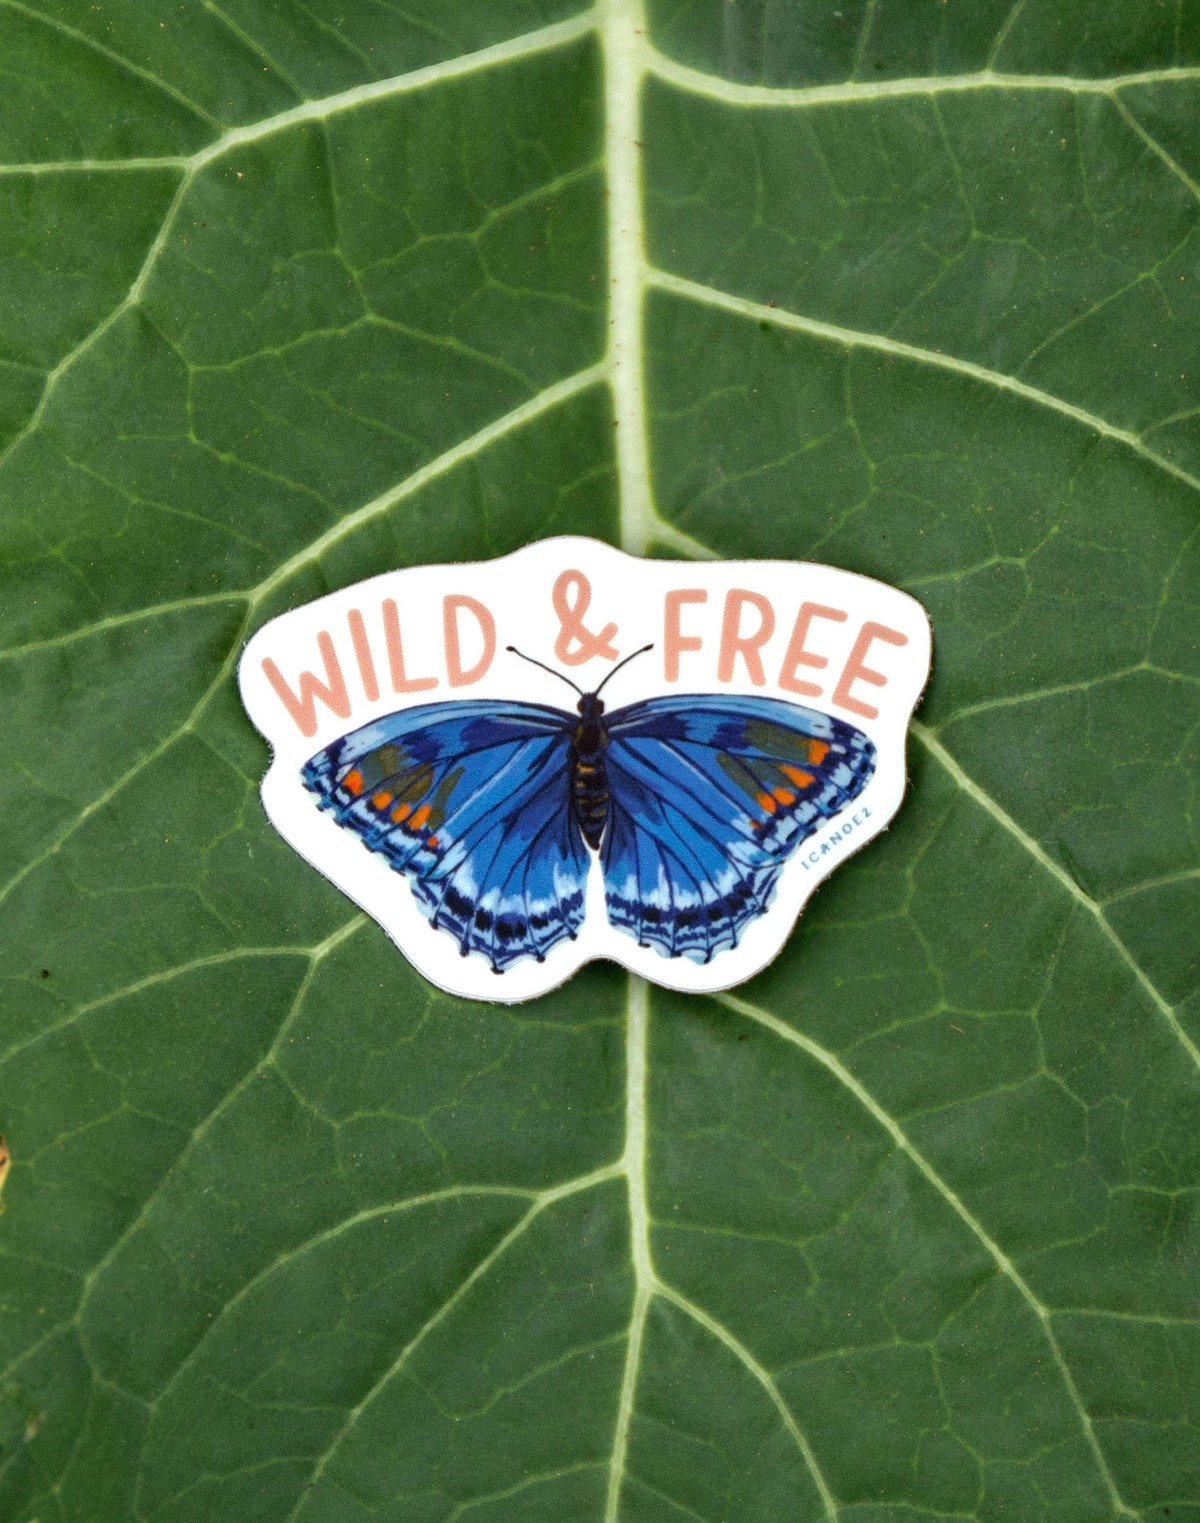 Wild & Free Butterfly Decal Sticker item